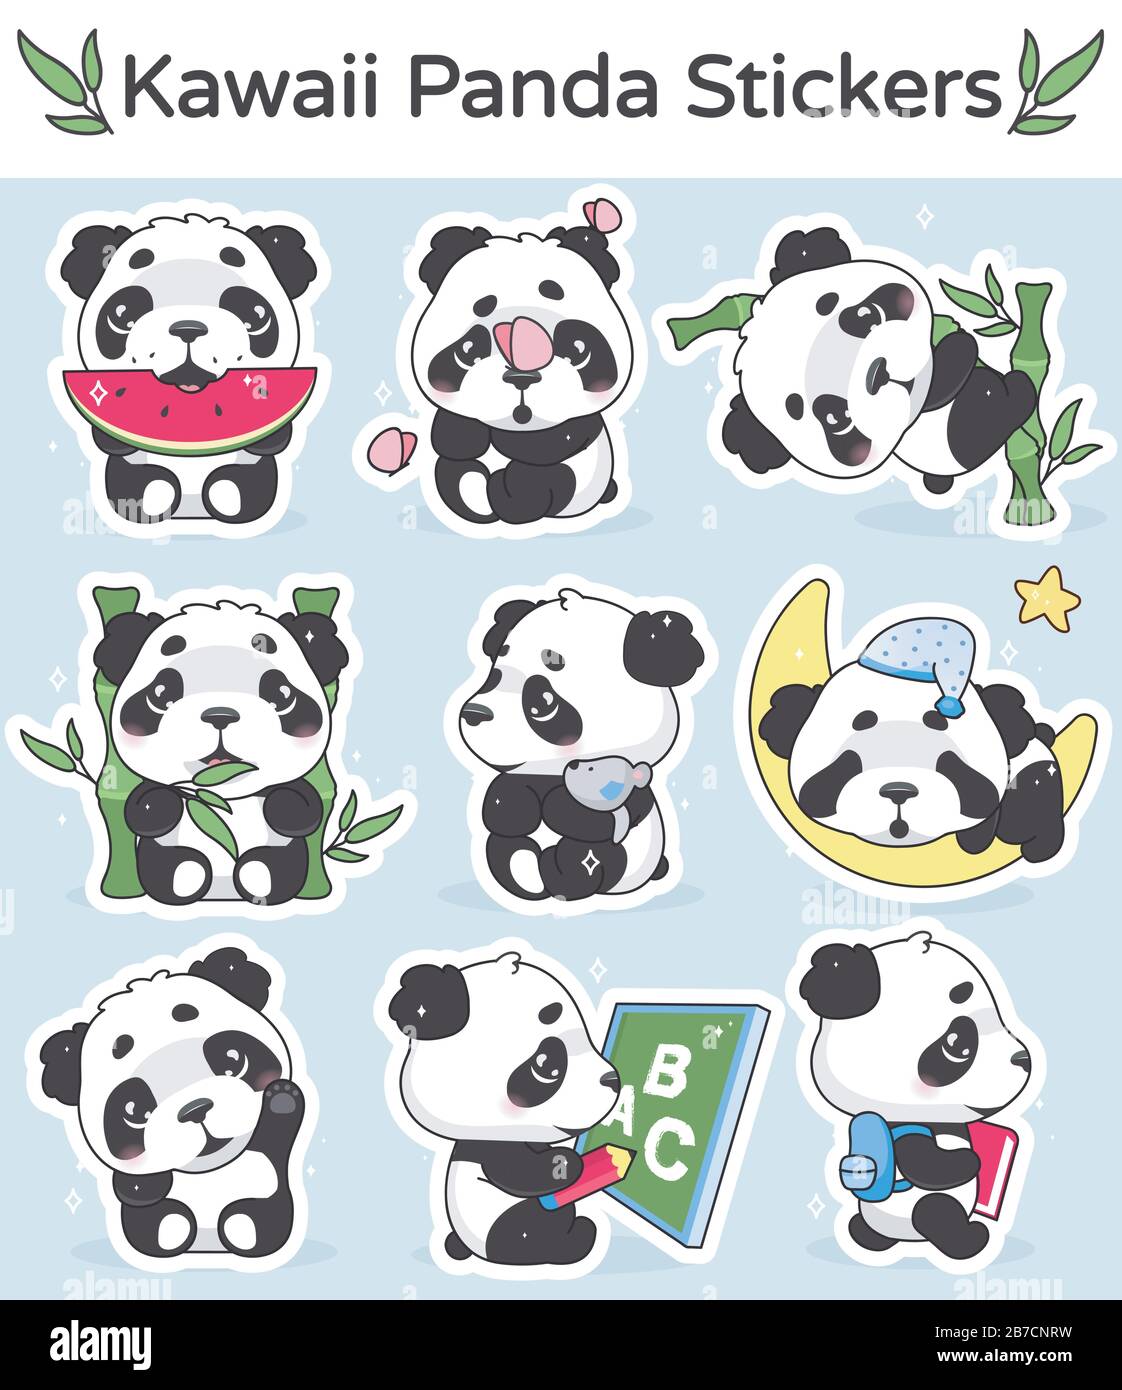 Kawaii Panda Images – Browse 16,923 Stock Photos, Vectors, and Video |  Adobe Stock